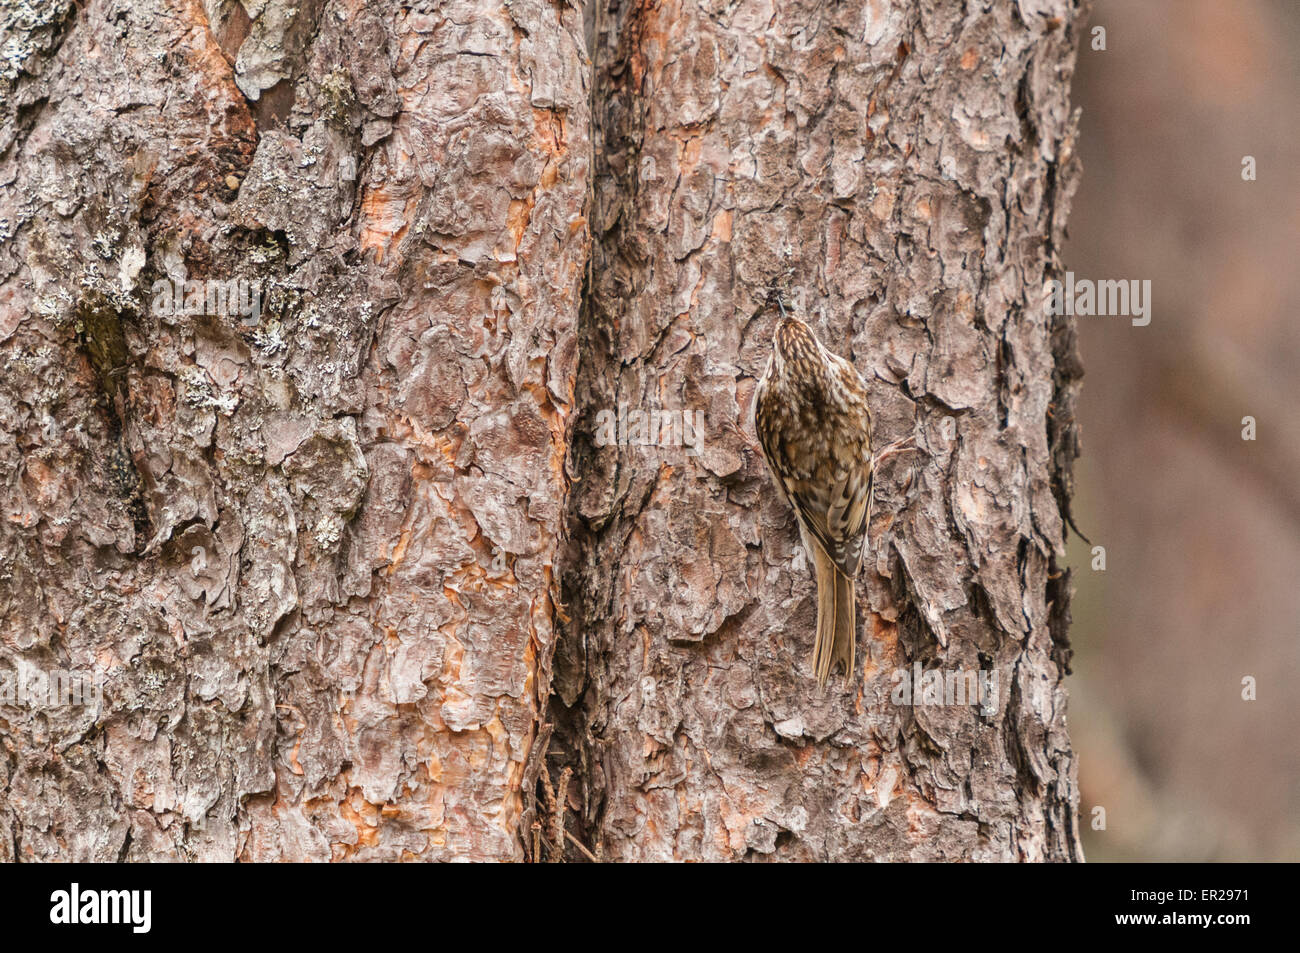 A common or Eurasian Tree Creeper, Certhia familiaris, near it's nest in a gap in a pine tree bark. Stock Photo